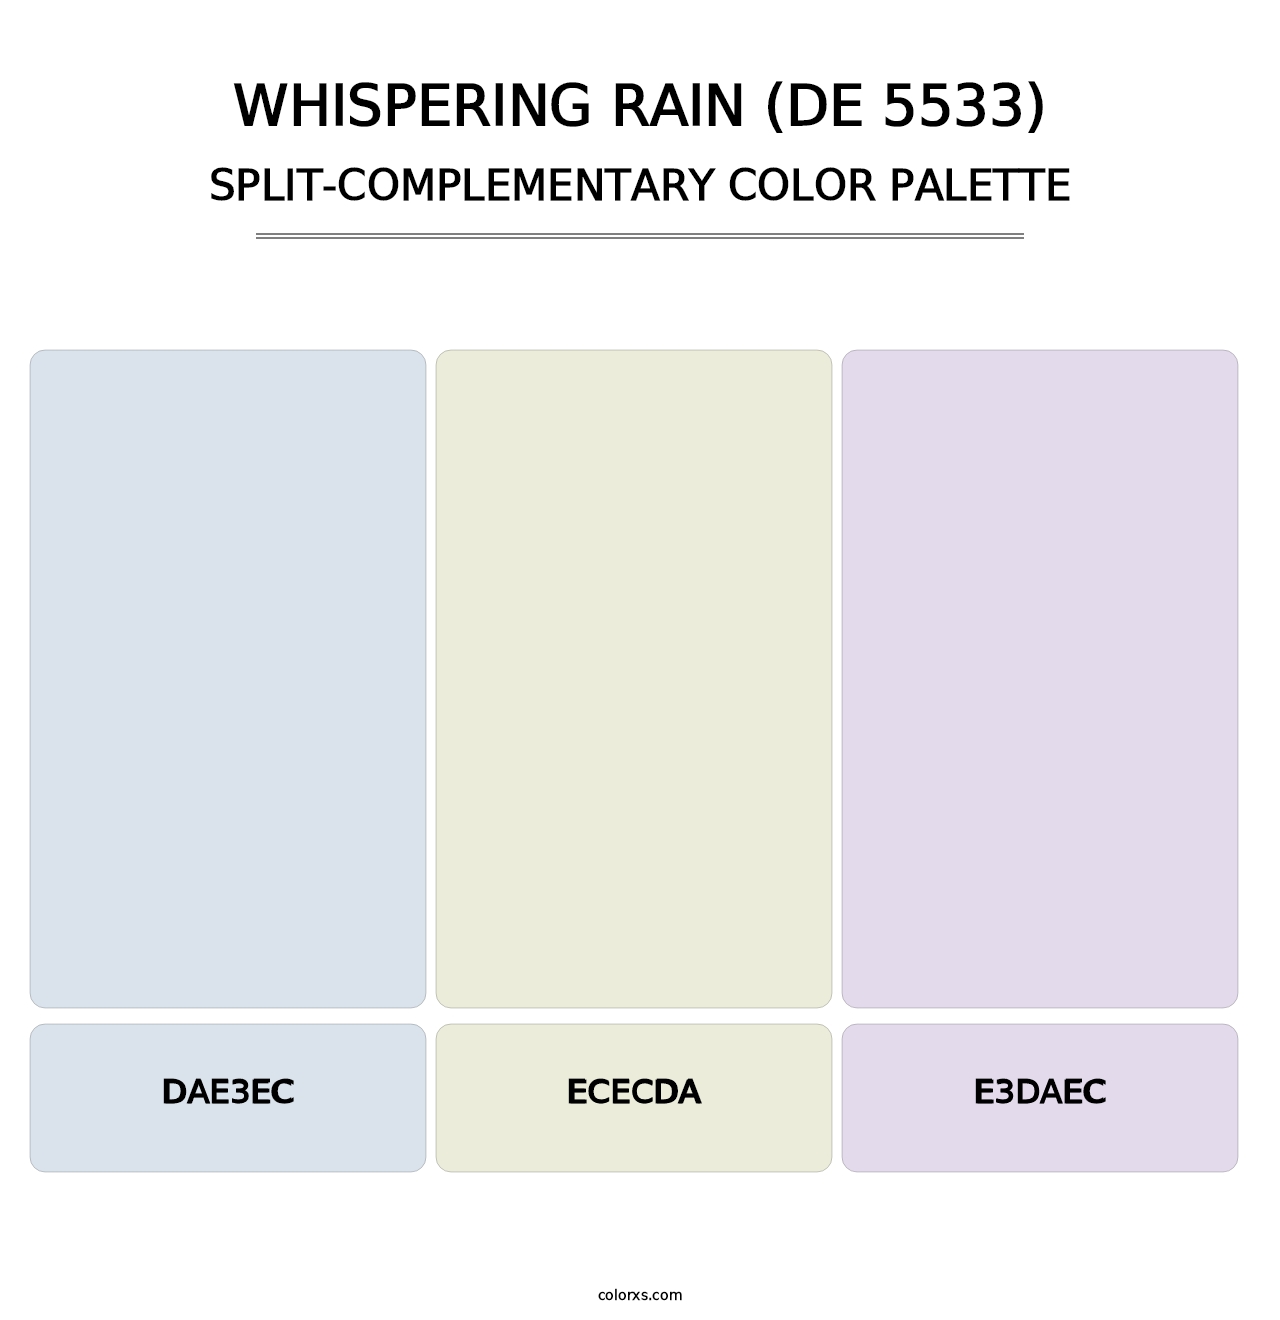 Whispering Rain (DE 5533) - Split-Complementary Color Palette